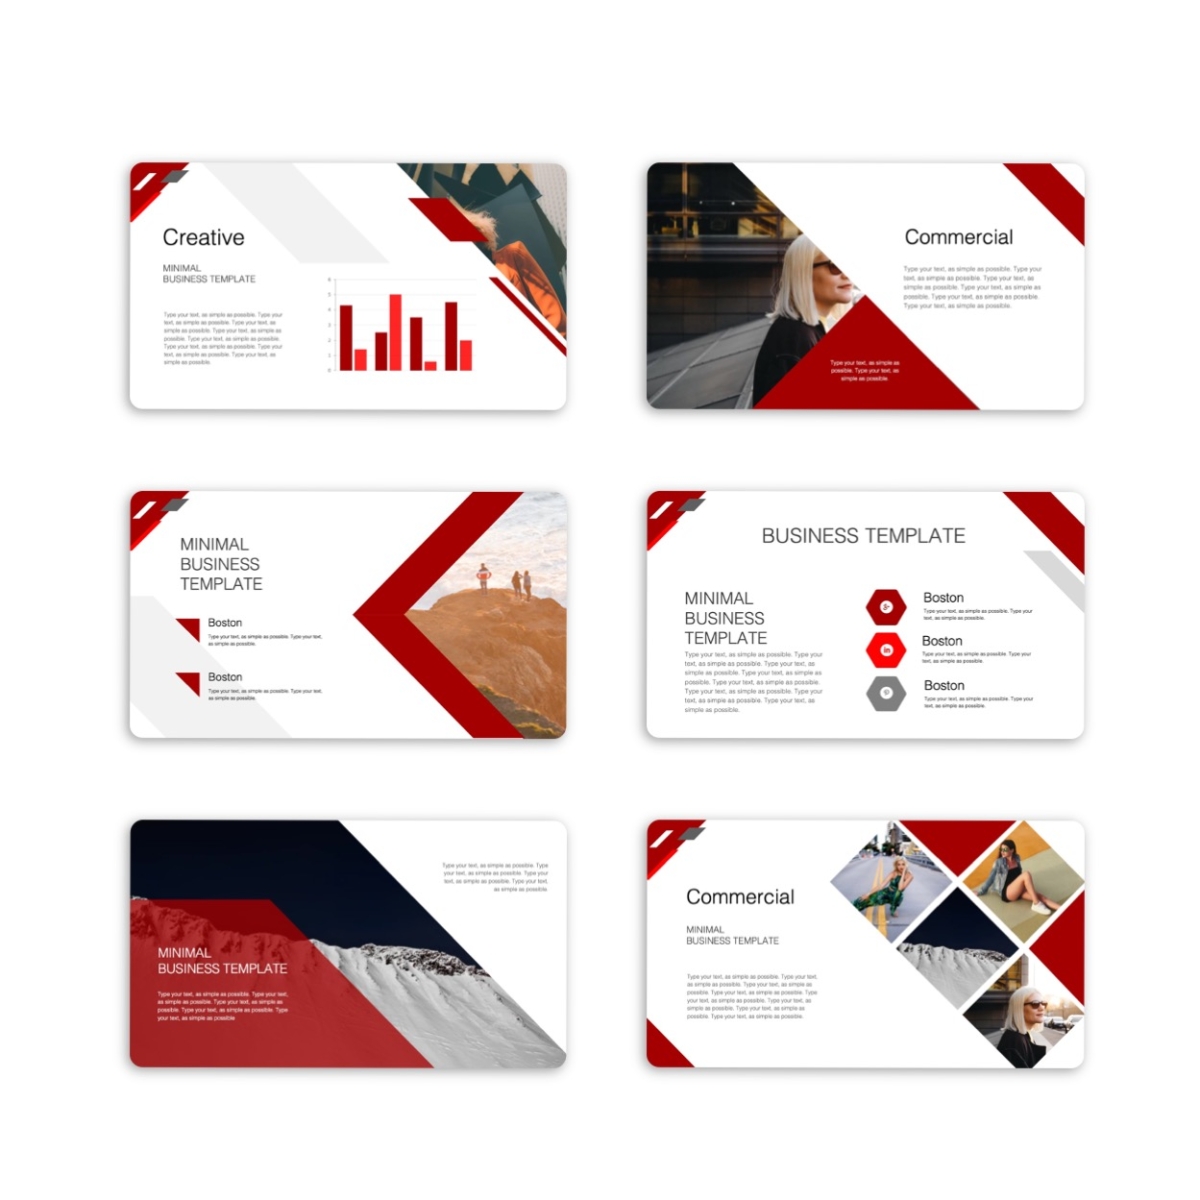 Red Business Report Presentation Powerpoint - Google Slides